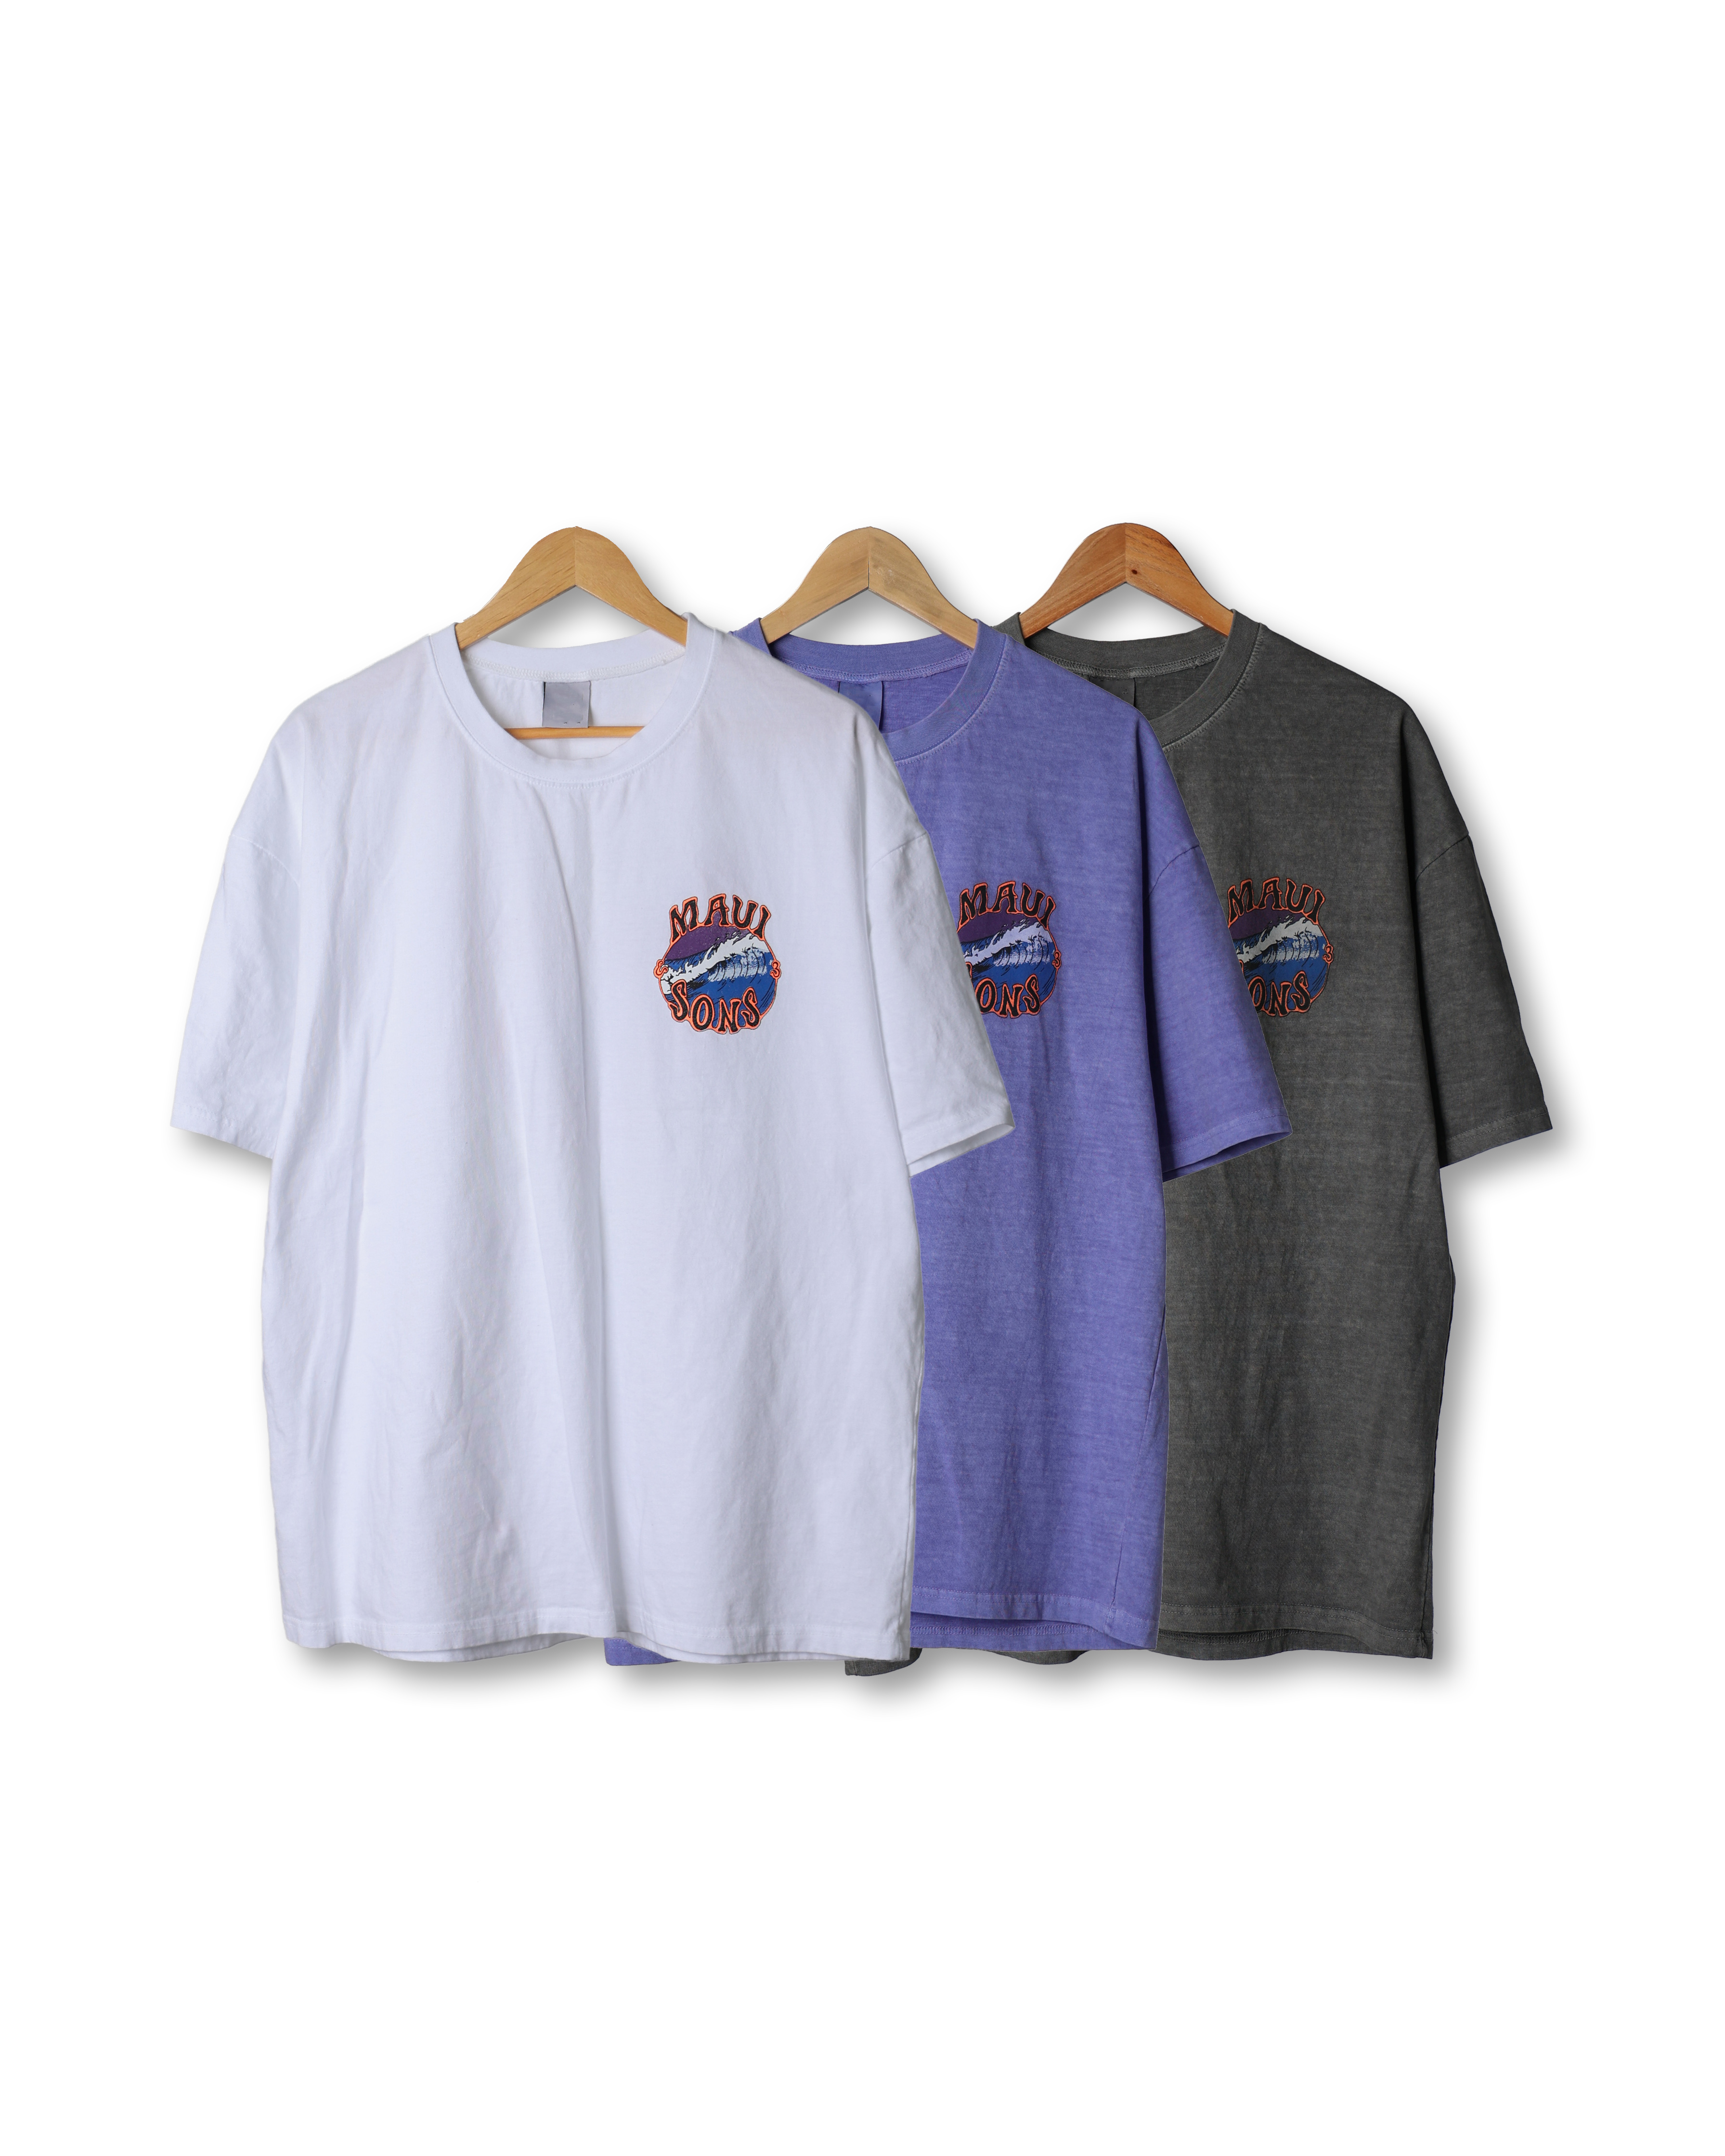 VELLY MAUI Printed Pigment T Shirts (Light Charcoal/Light Purple/White)